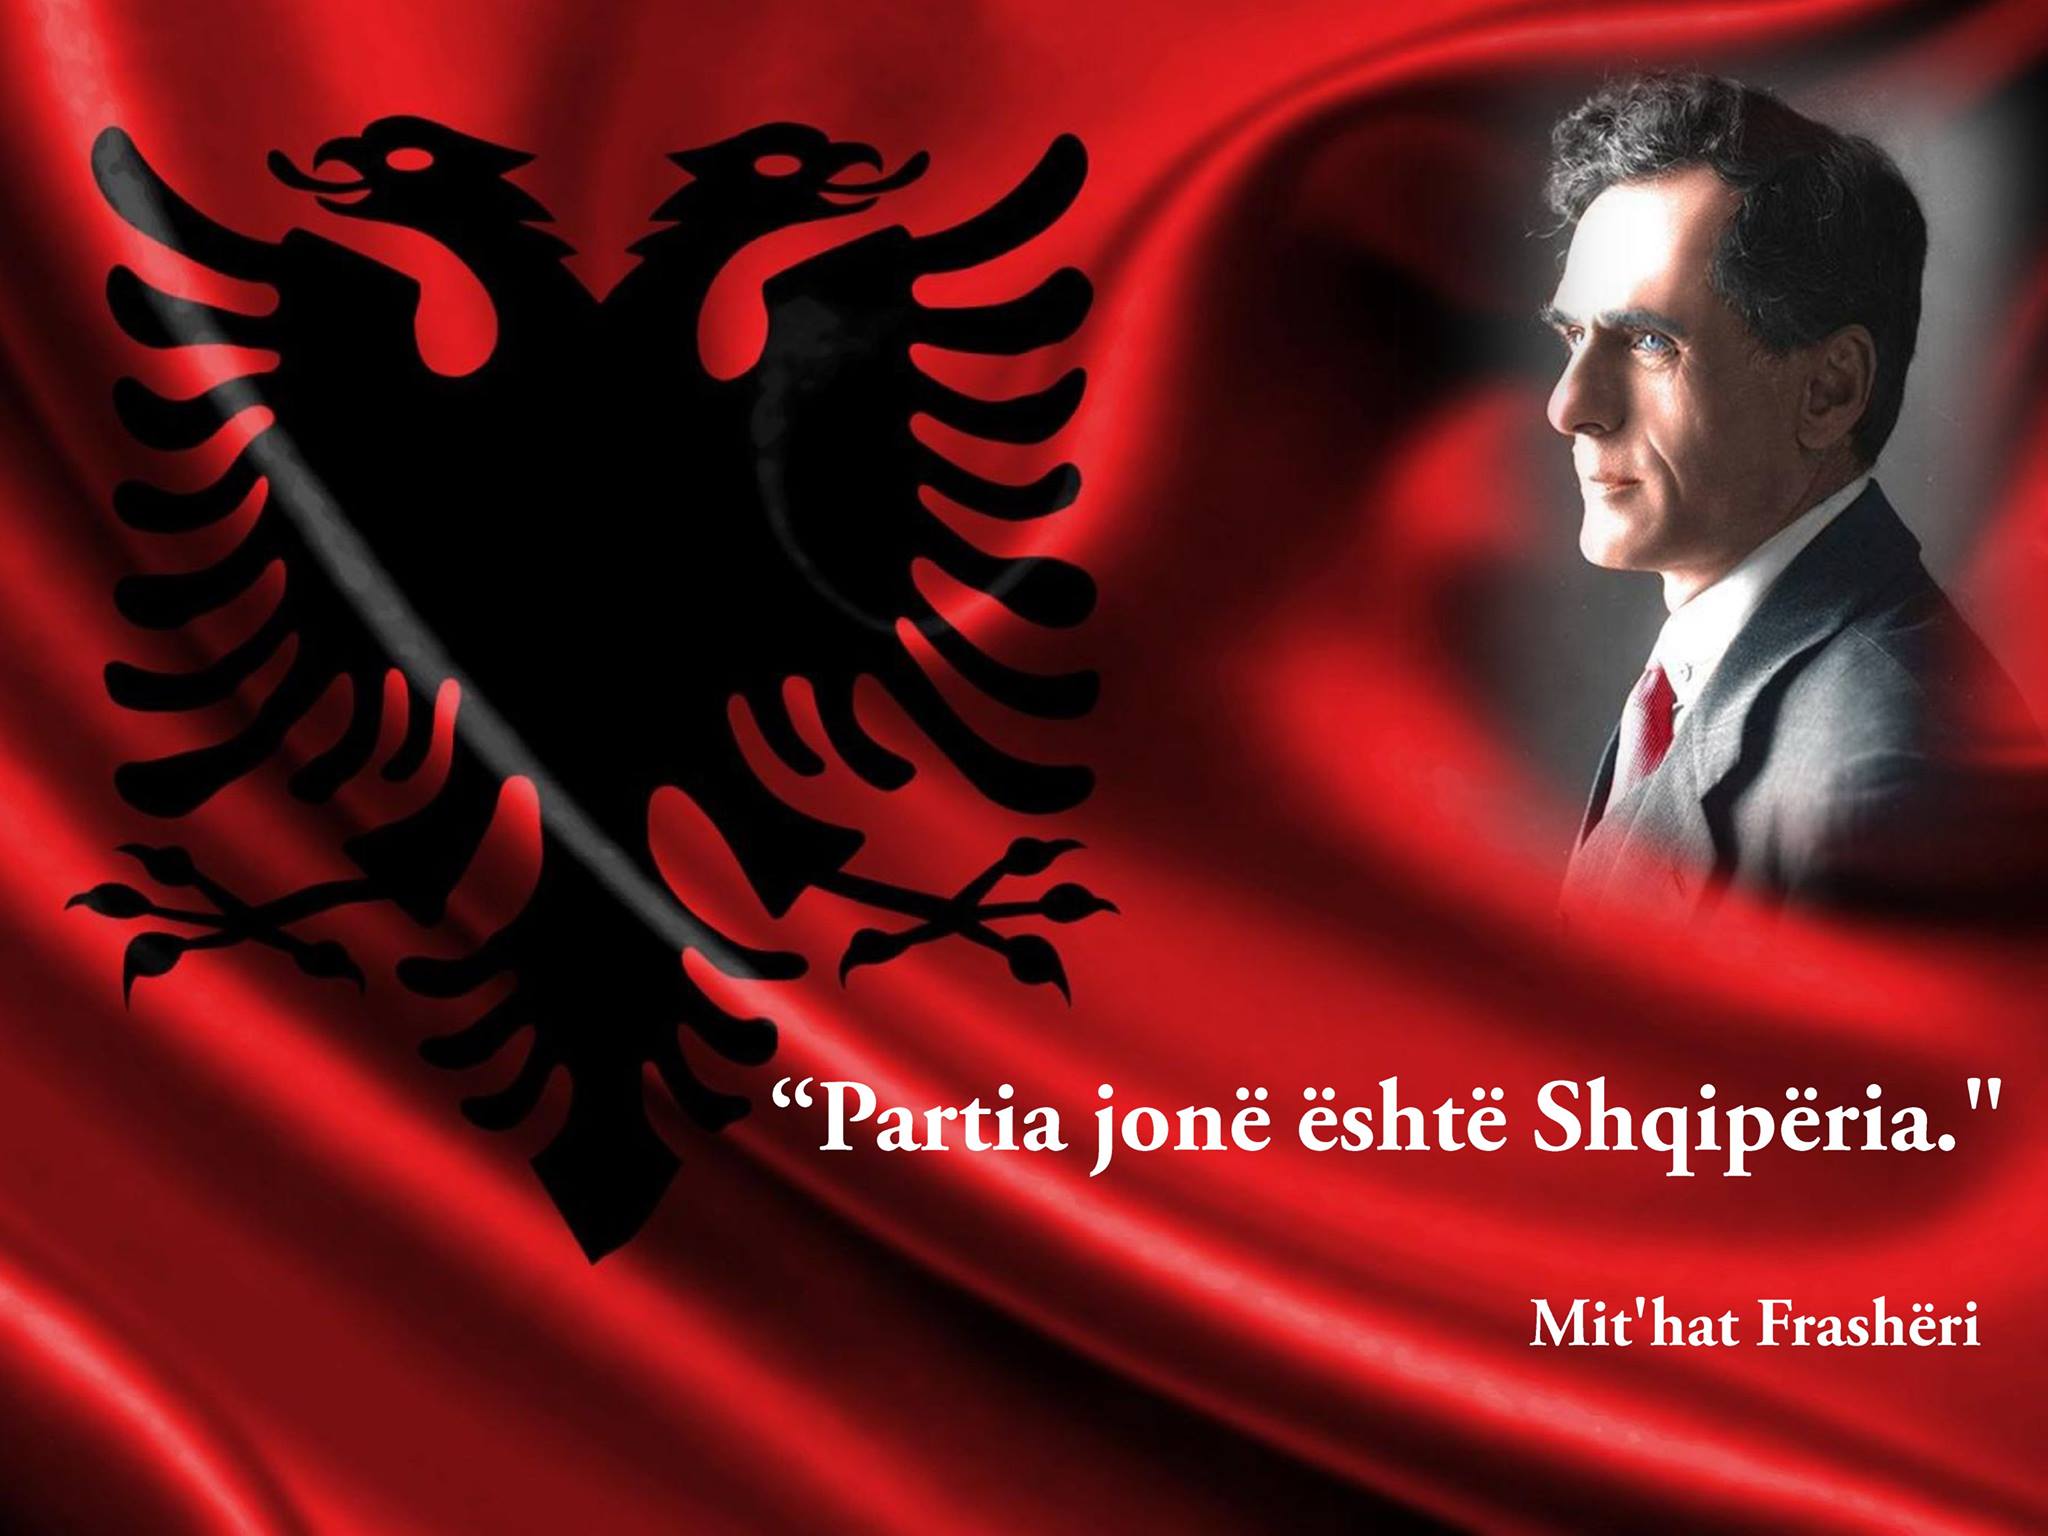 You are currently viewing Nderohet lideri i nacionalizmit shqiptar – Mit’hat Frashëri